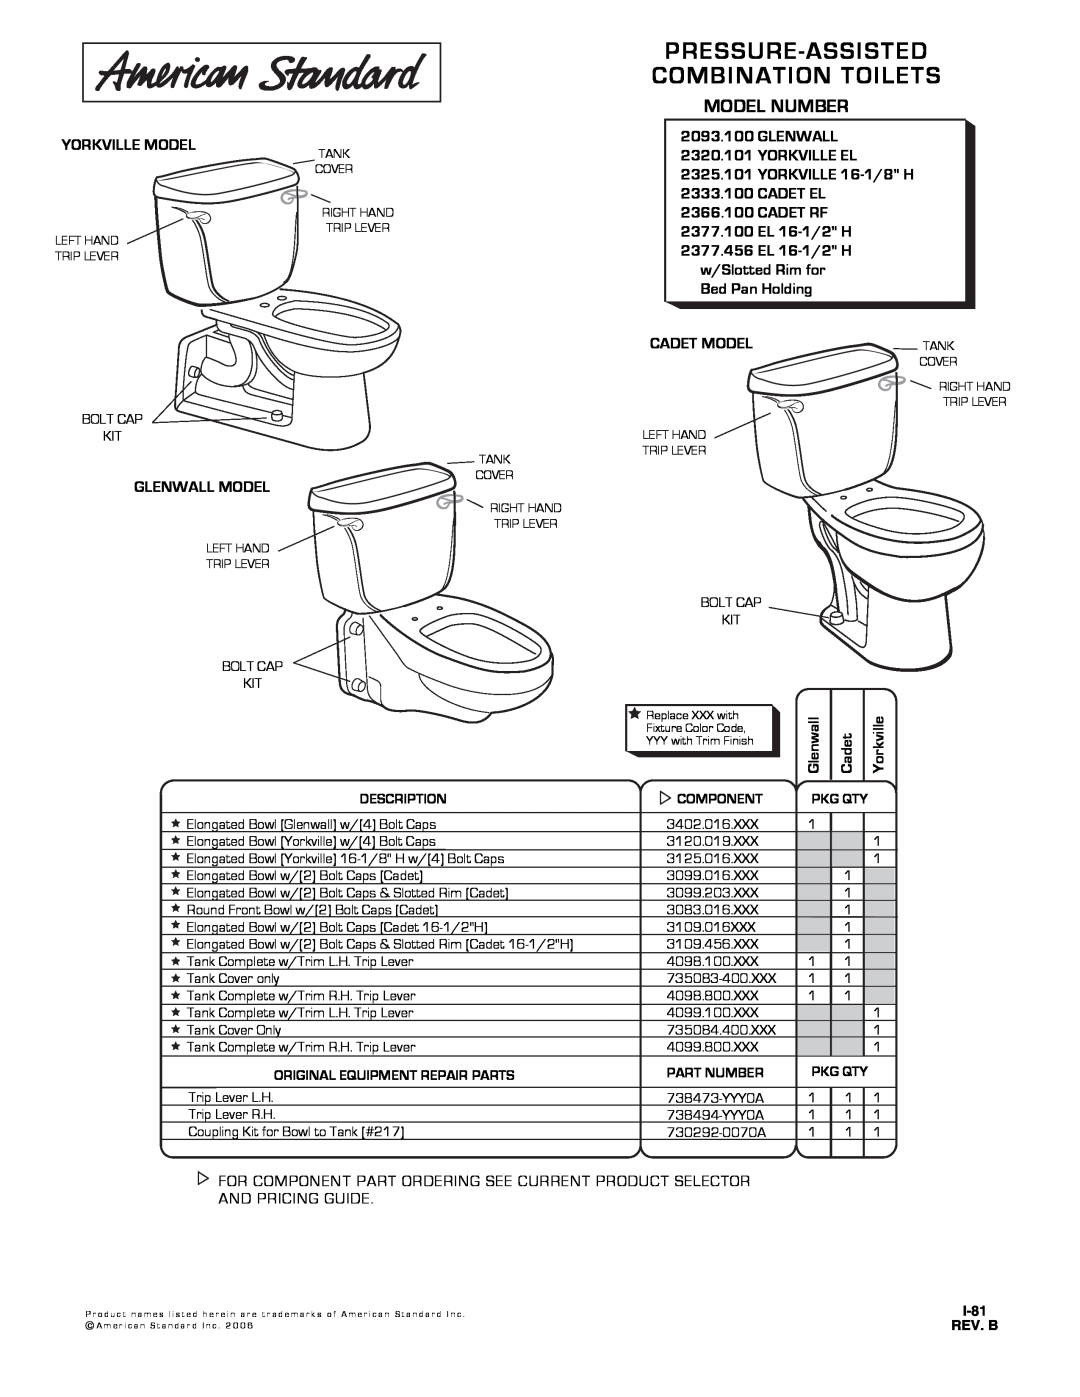 American Standard 2333.100 manual Pressure-Assistedcombination Toilets, Yorkville Model, GLENWALL 2320.101 YORKVILLE EL 